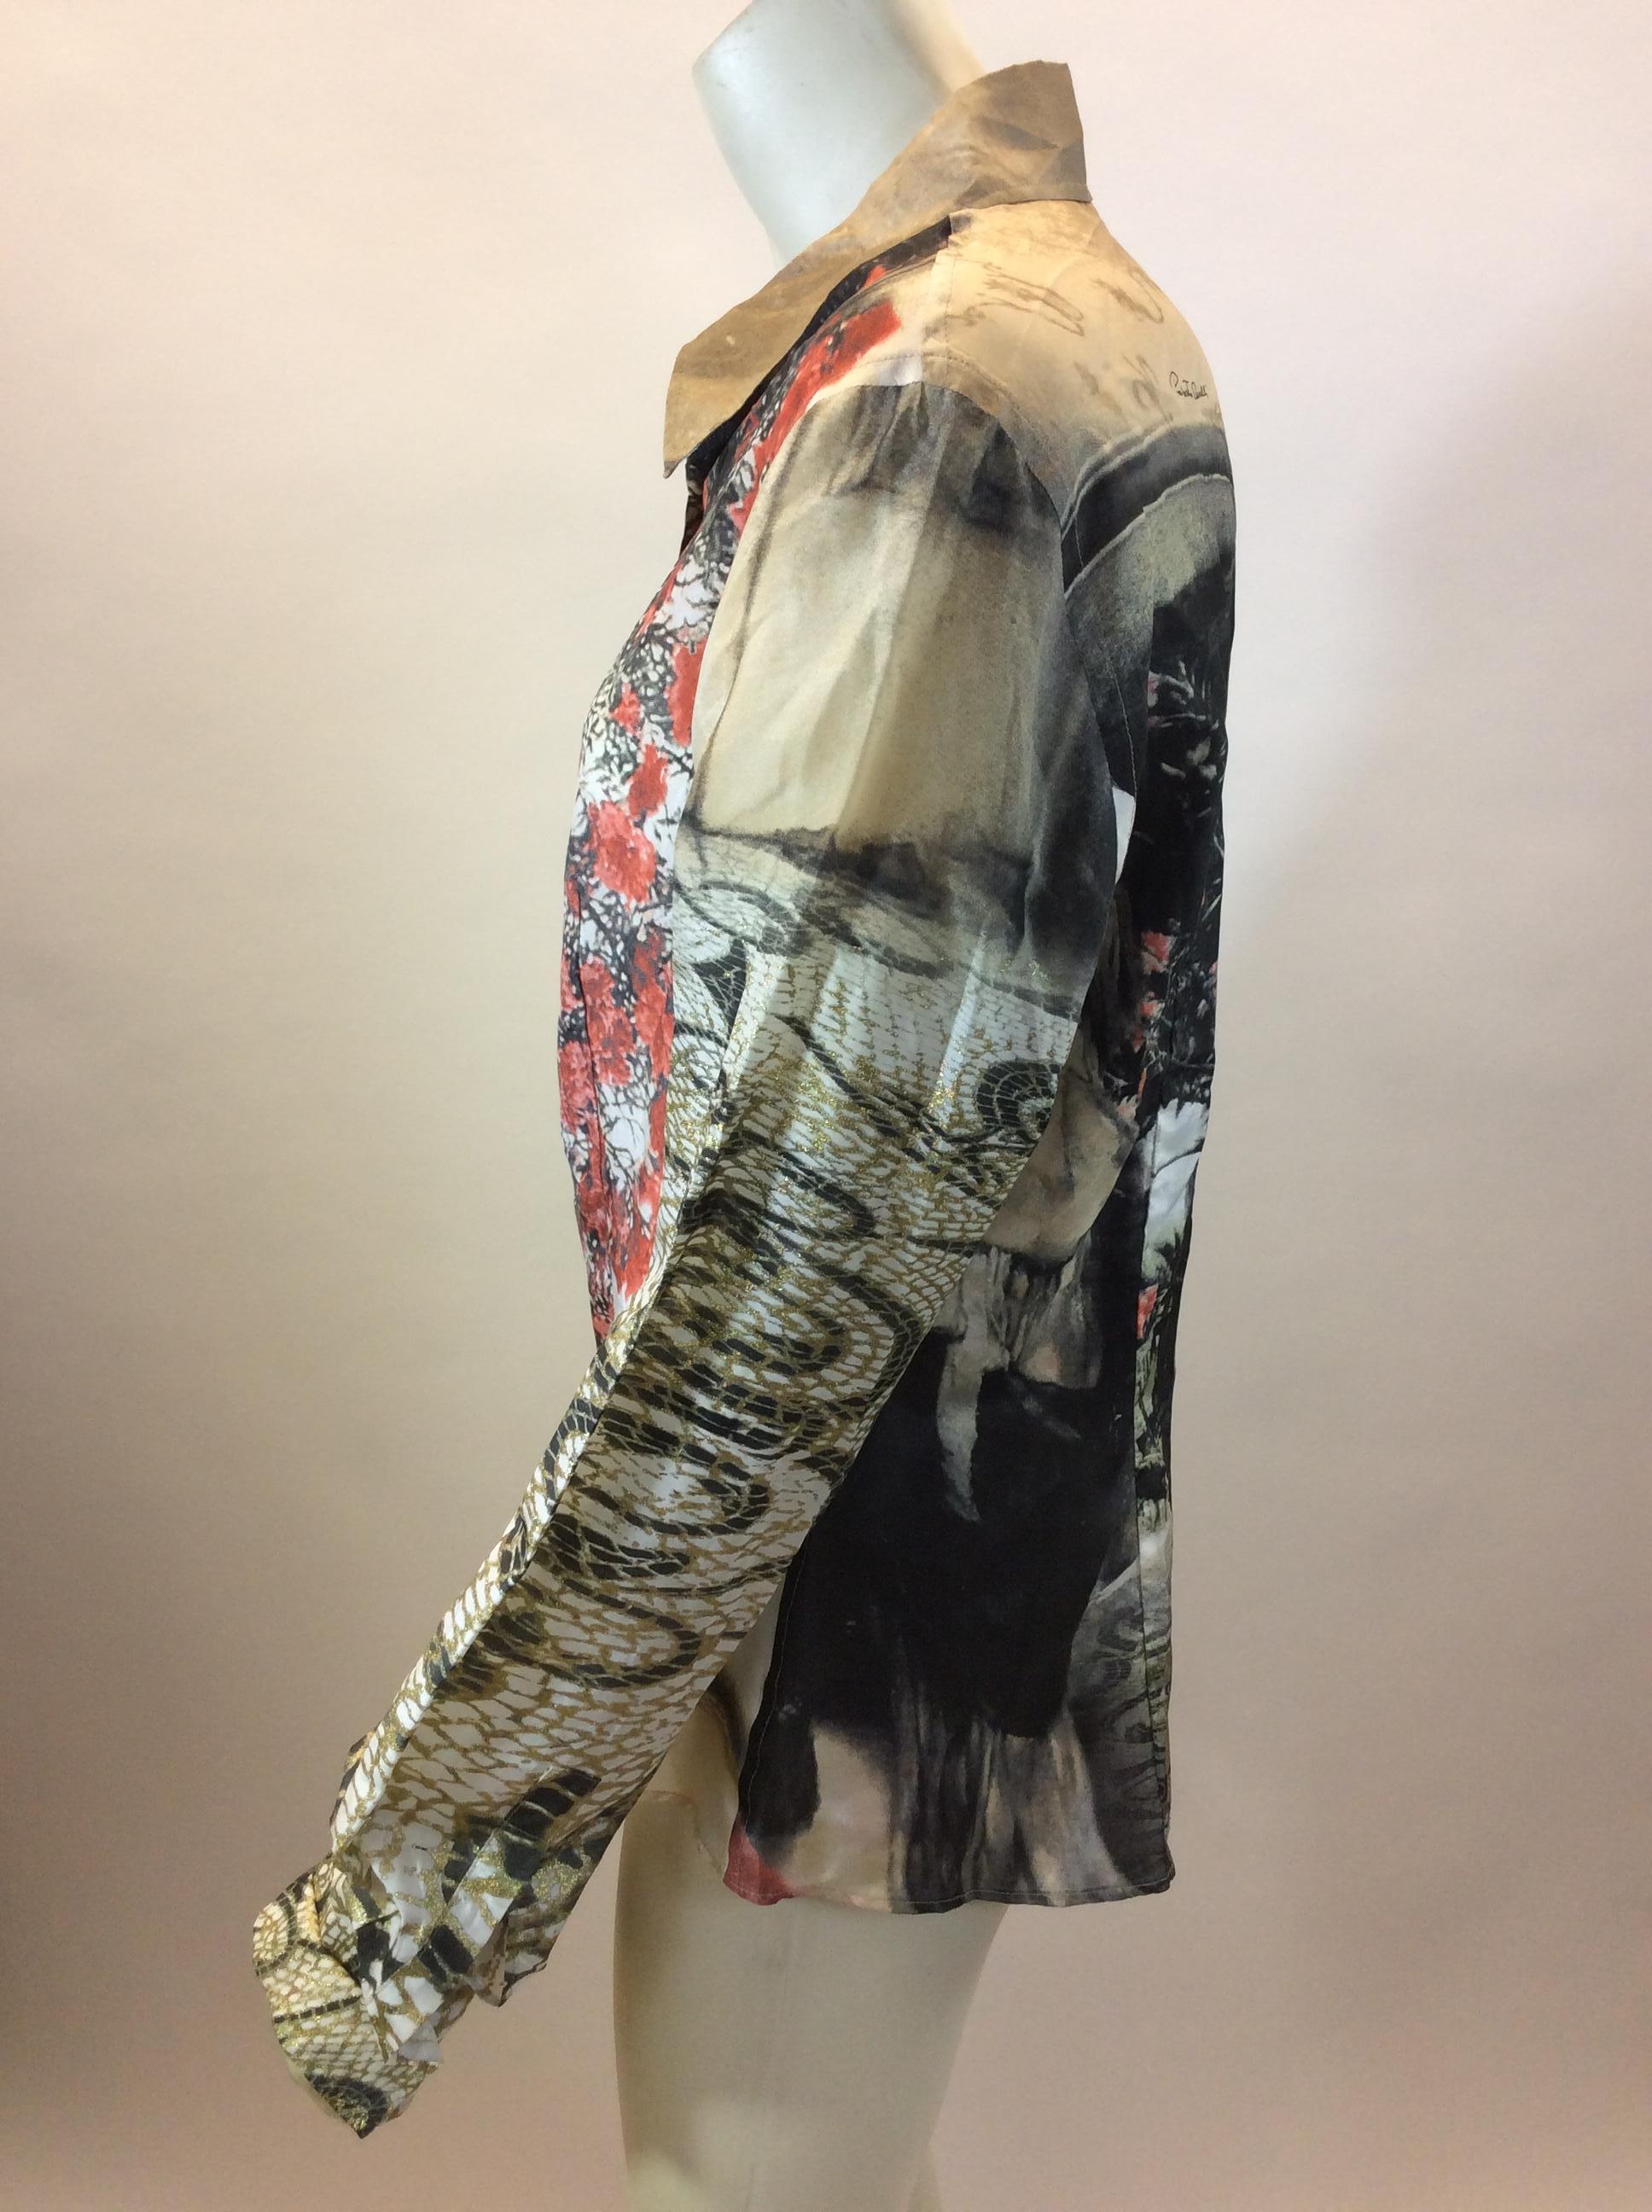 Roberto Cavalli Silk Print Blouse
$138
Made in Italy
100% Silk
Size Medium
Length 24